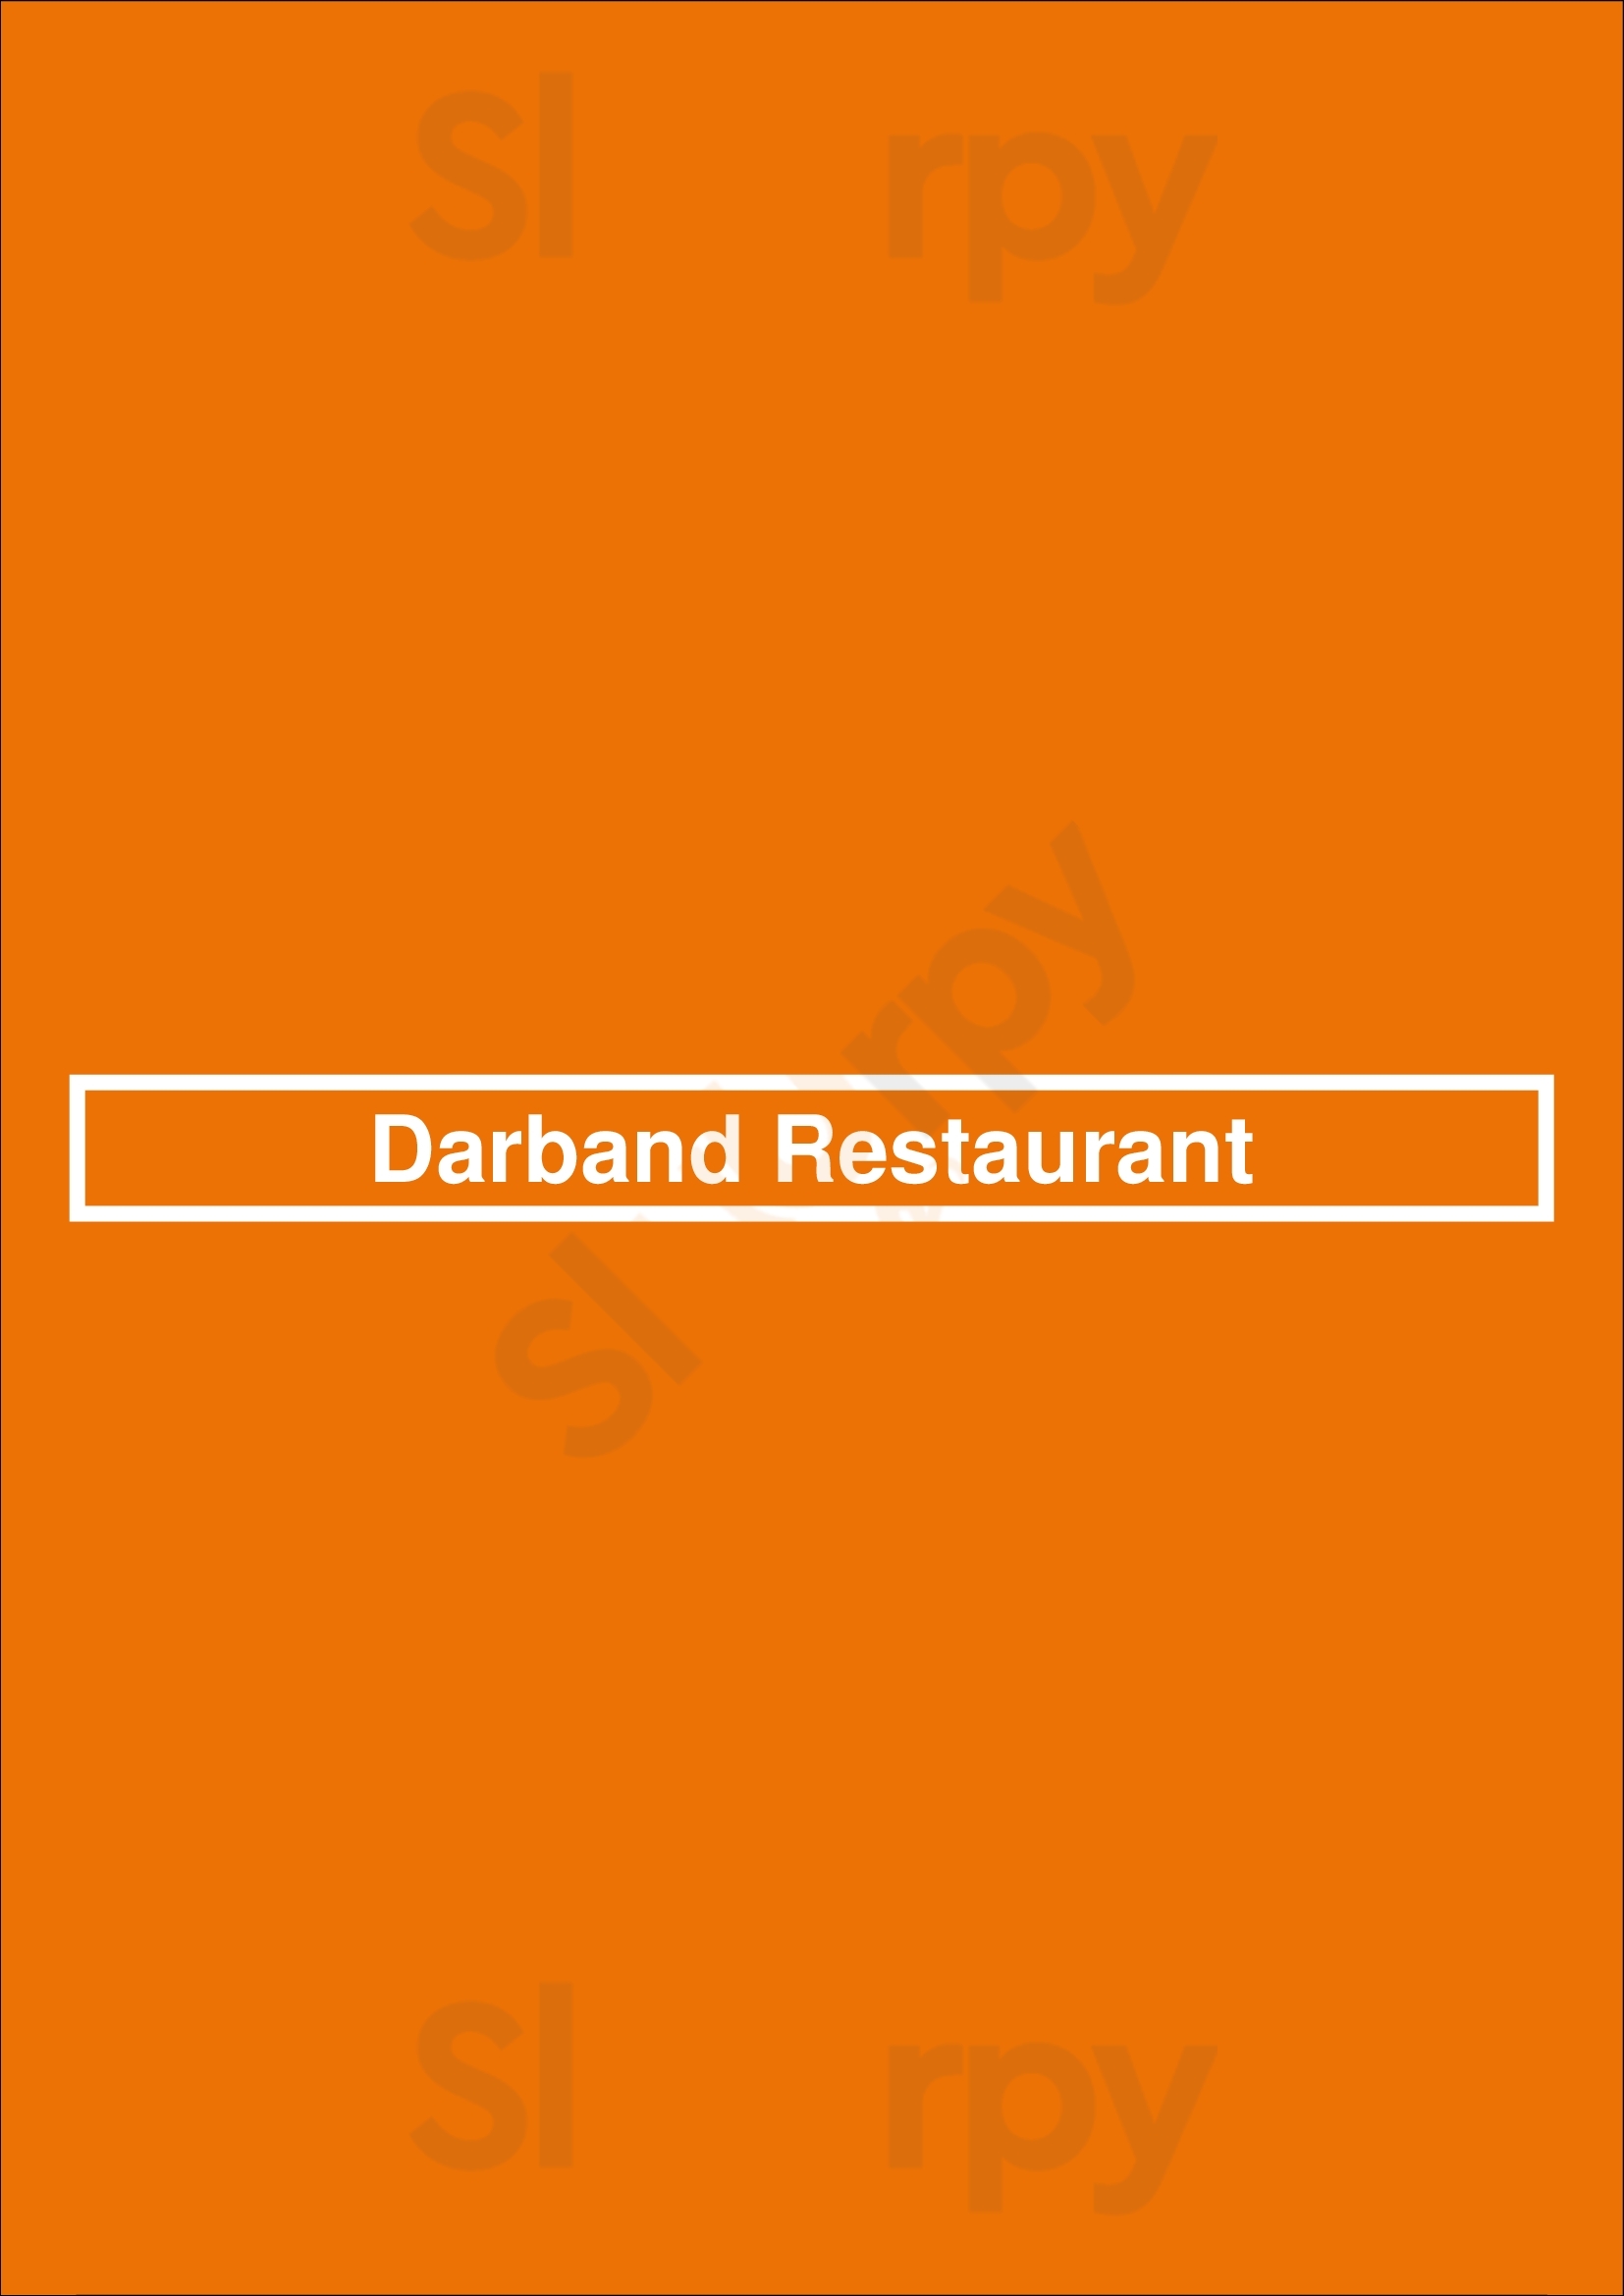 Darband Restaurant Toronto Menu - 1